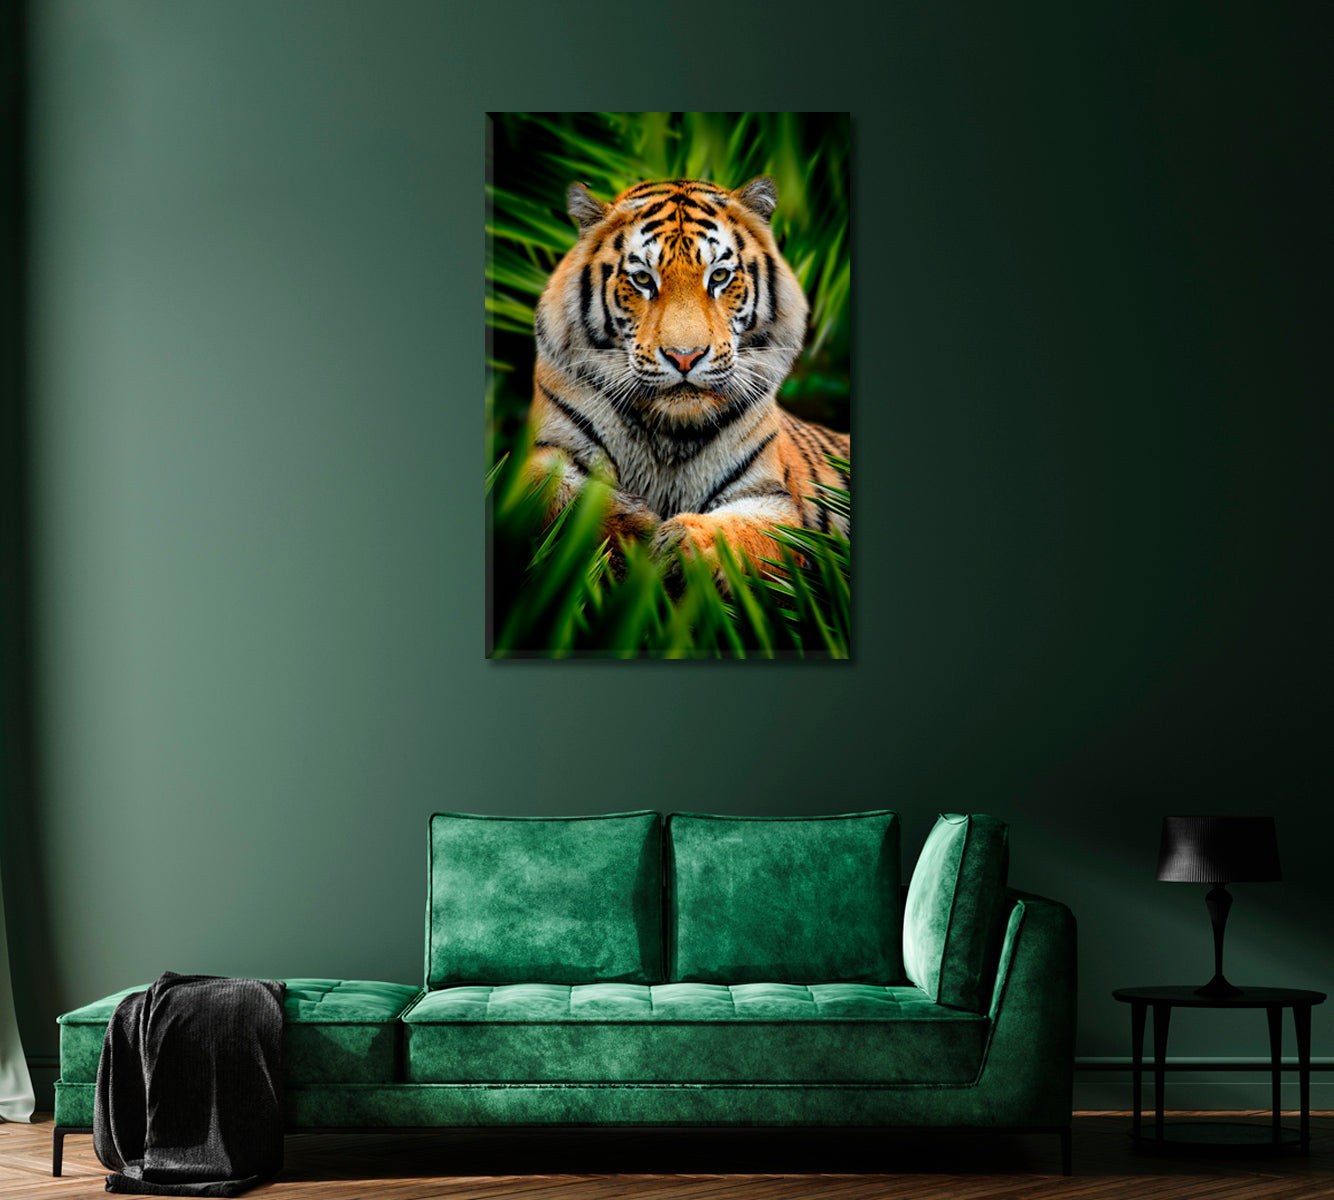 Tiger in Jungle Canvas Home Decor-Canvas Print-CetArt-1 panel-16x24 inches-CetArt